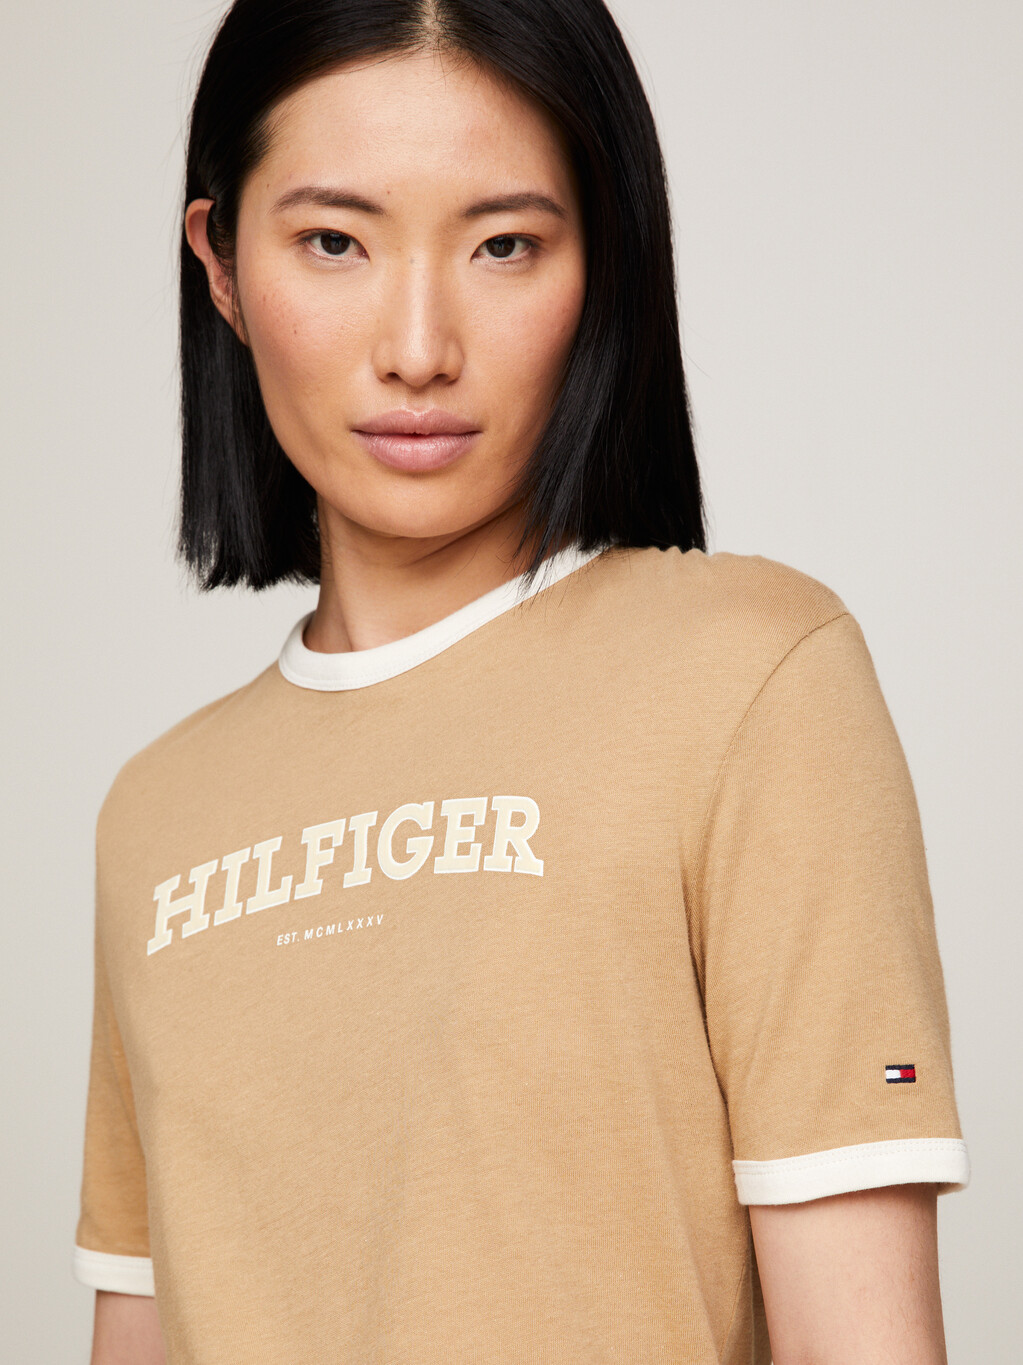 Hilfiger Monotype Flocked Logo T-Shirt, Classic Khaki, hi-res